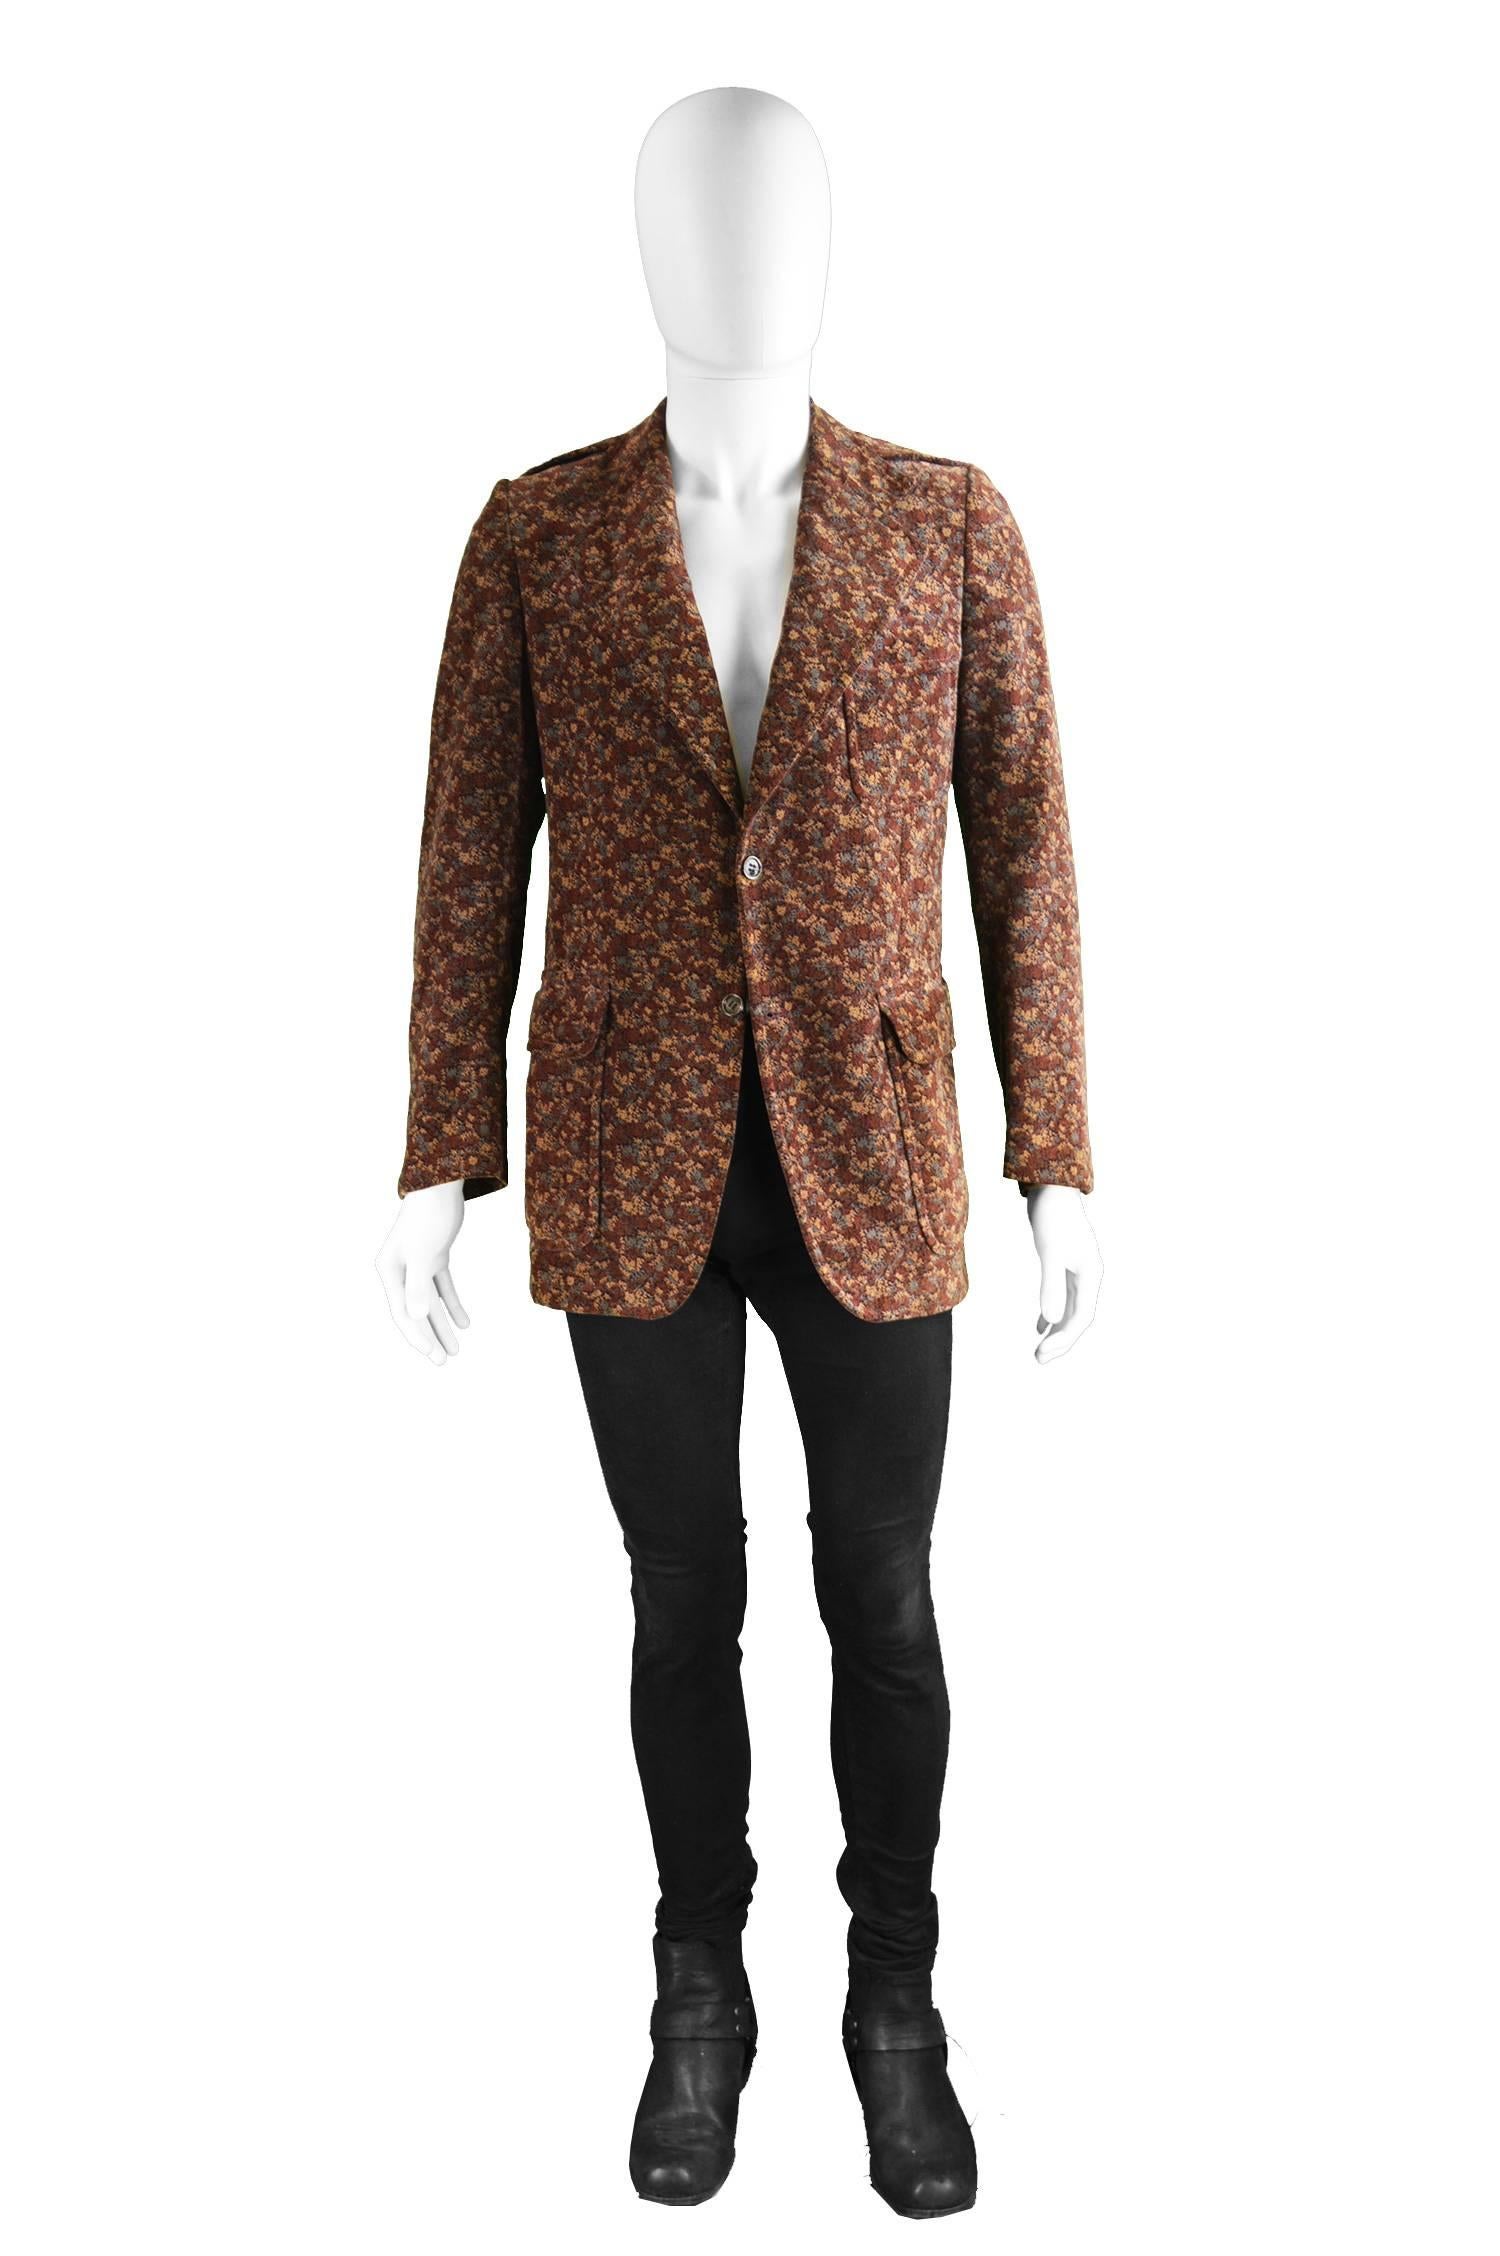 Ted Lapidus Vintage Mens Brown Velvet Tailored Blazer Jacket, 1970s

Estimated Size: Mens Small. Please check measurements.
Chest - 40” / 101cm (allow a couple of inches room for movement)
Length (Shoulder to Hem) - 29” / 73cm
Shoulder to Shoulder -